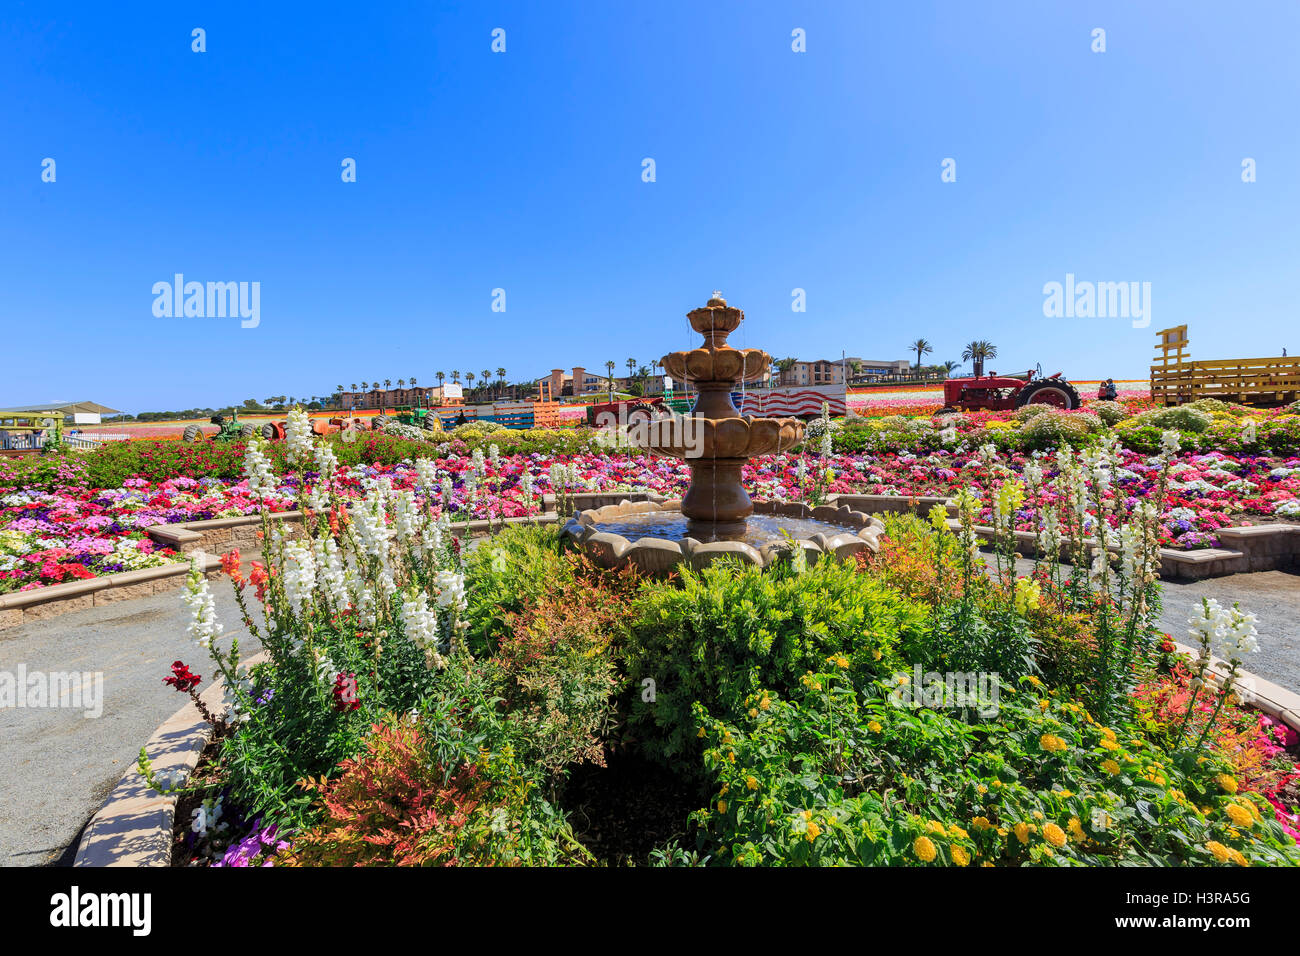 The beautiful Flower Fields at Carlsbad, California Stock Photo